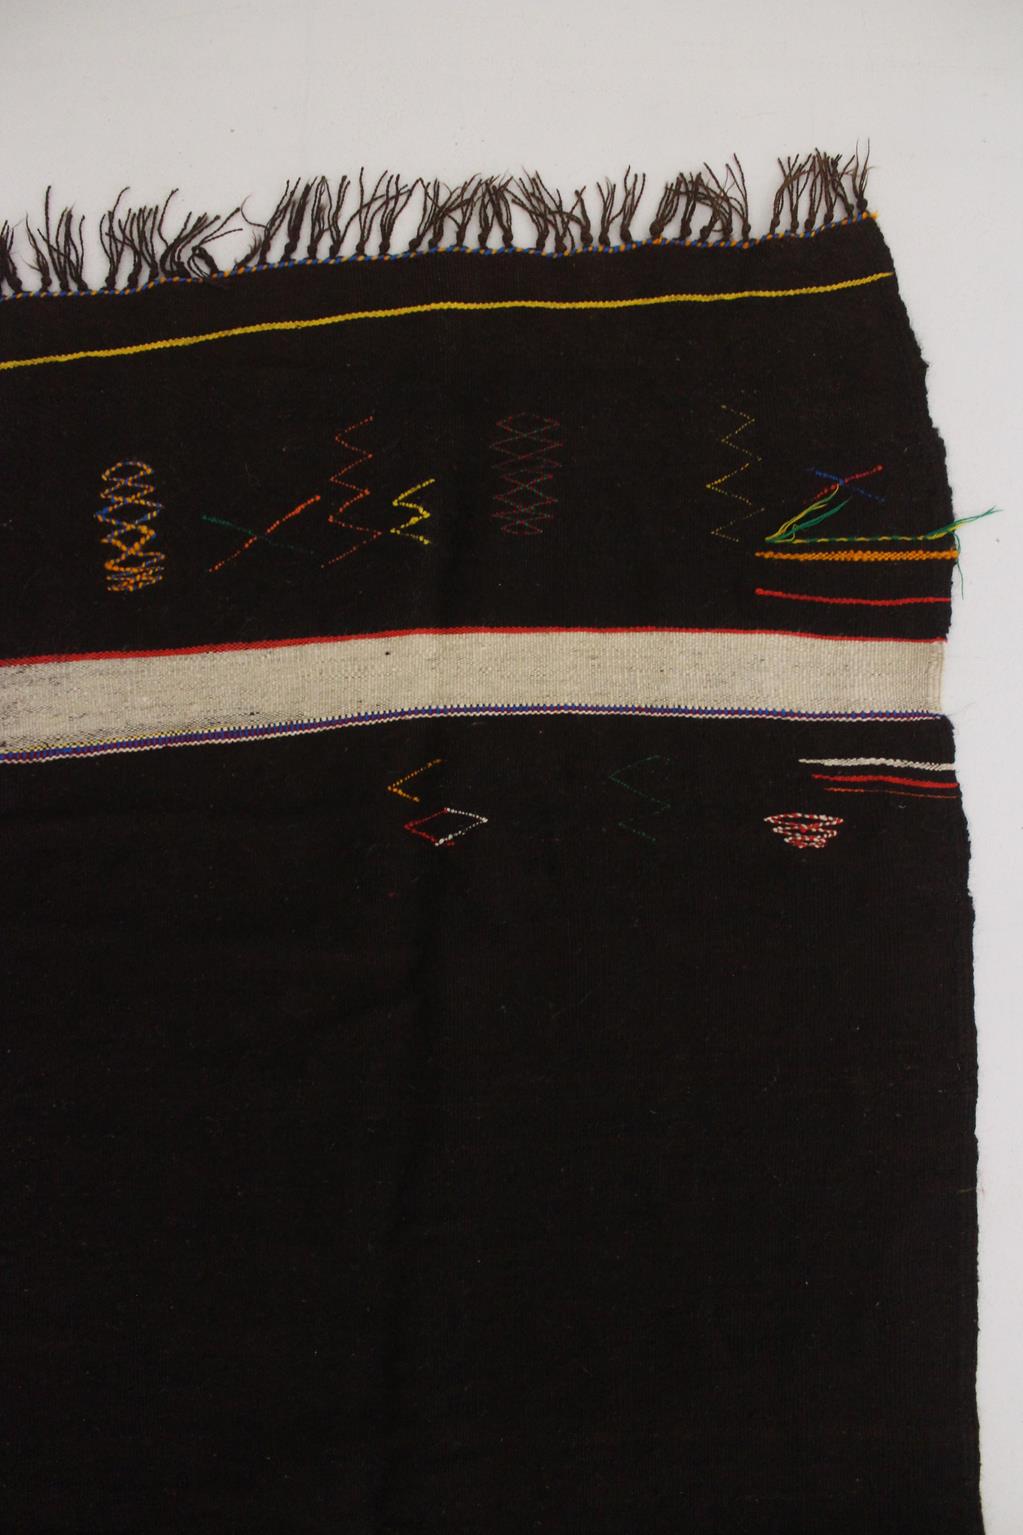 Berber blanket 5.5x13.5feet / 170x412cm